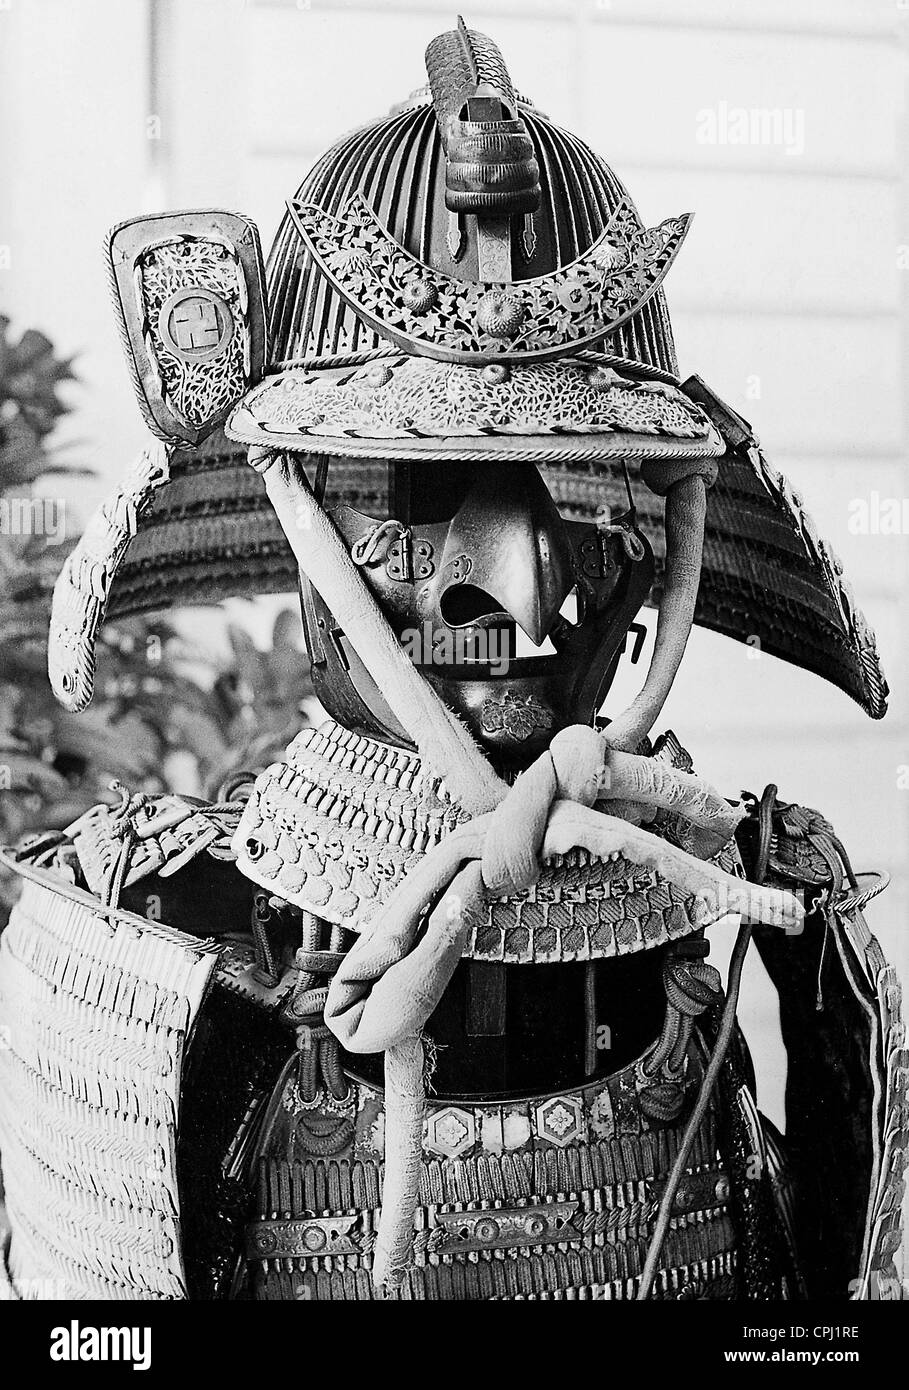 Armure d'un samouraï, 1940 Banque D'Images